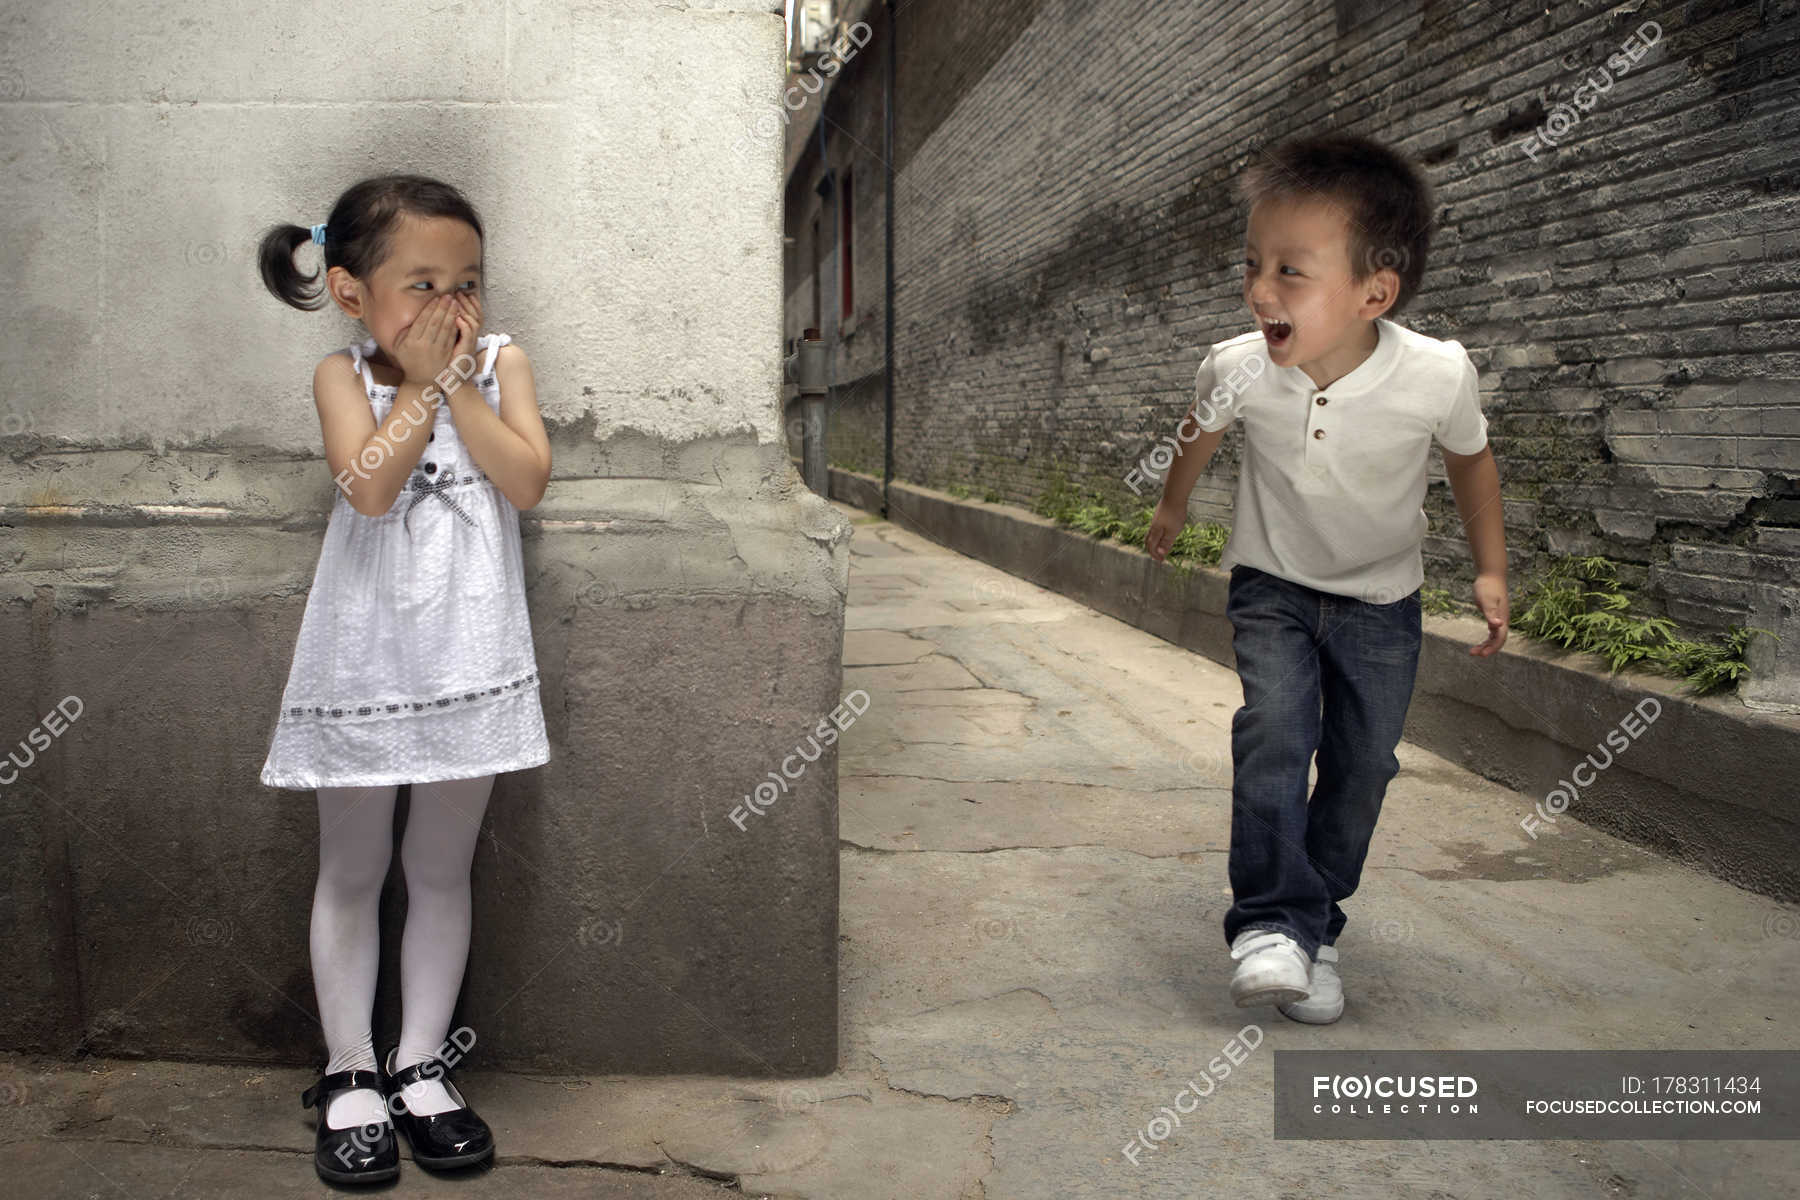 Focused 178311434 Stock Photo Chinese Children Playing Hide Seek 